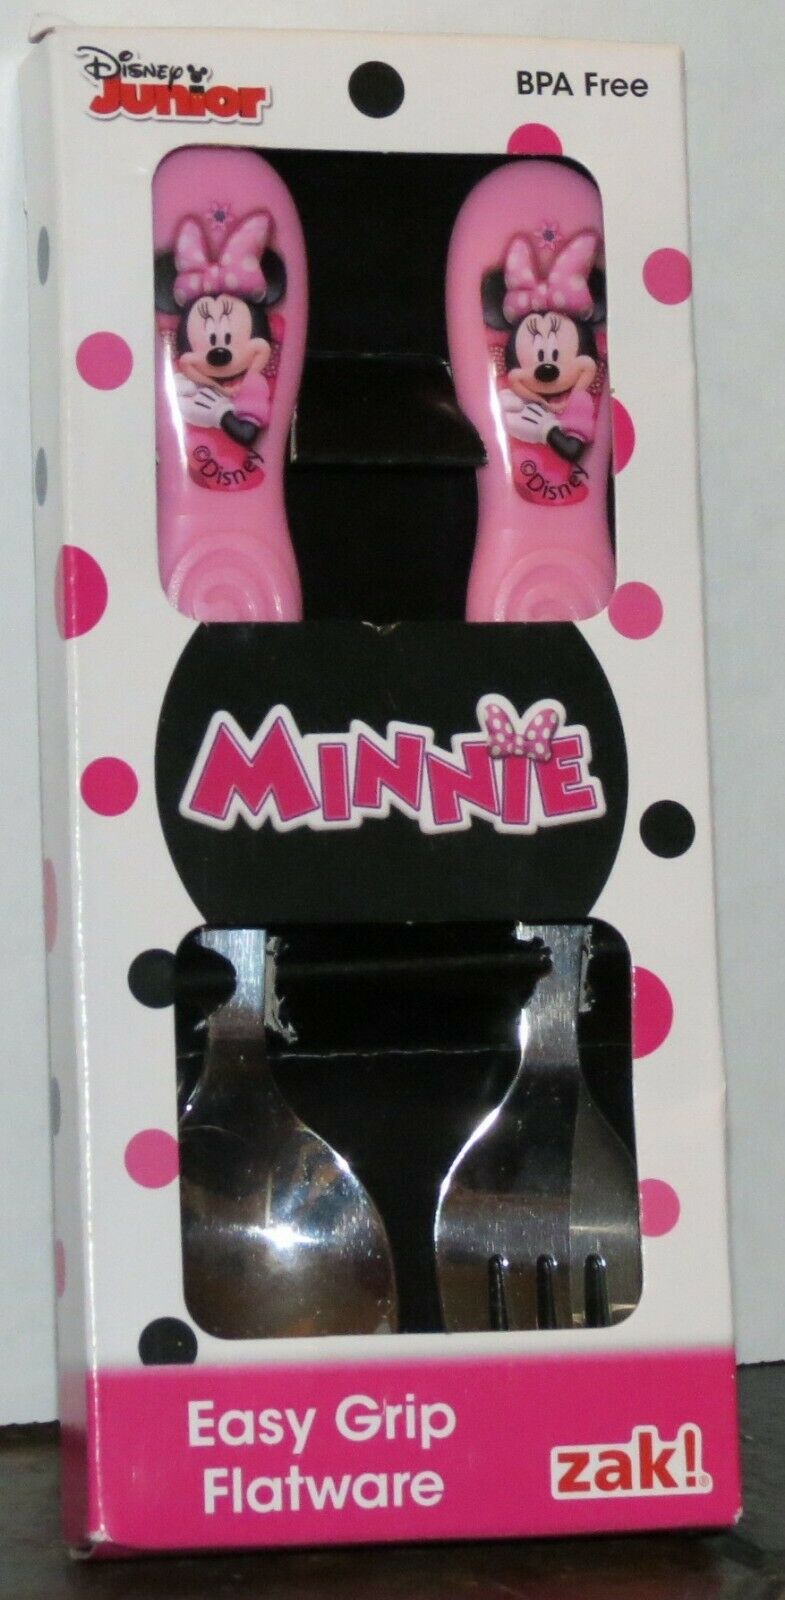 New Zak! Disney Junior Kids Easy Grip 2 Piece Flatware Set - Minnie Mouse